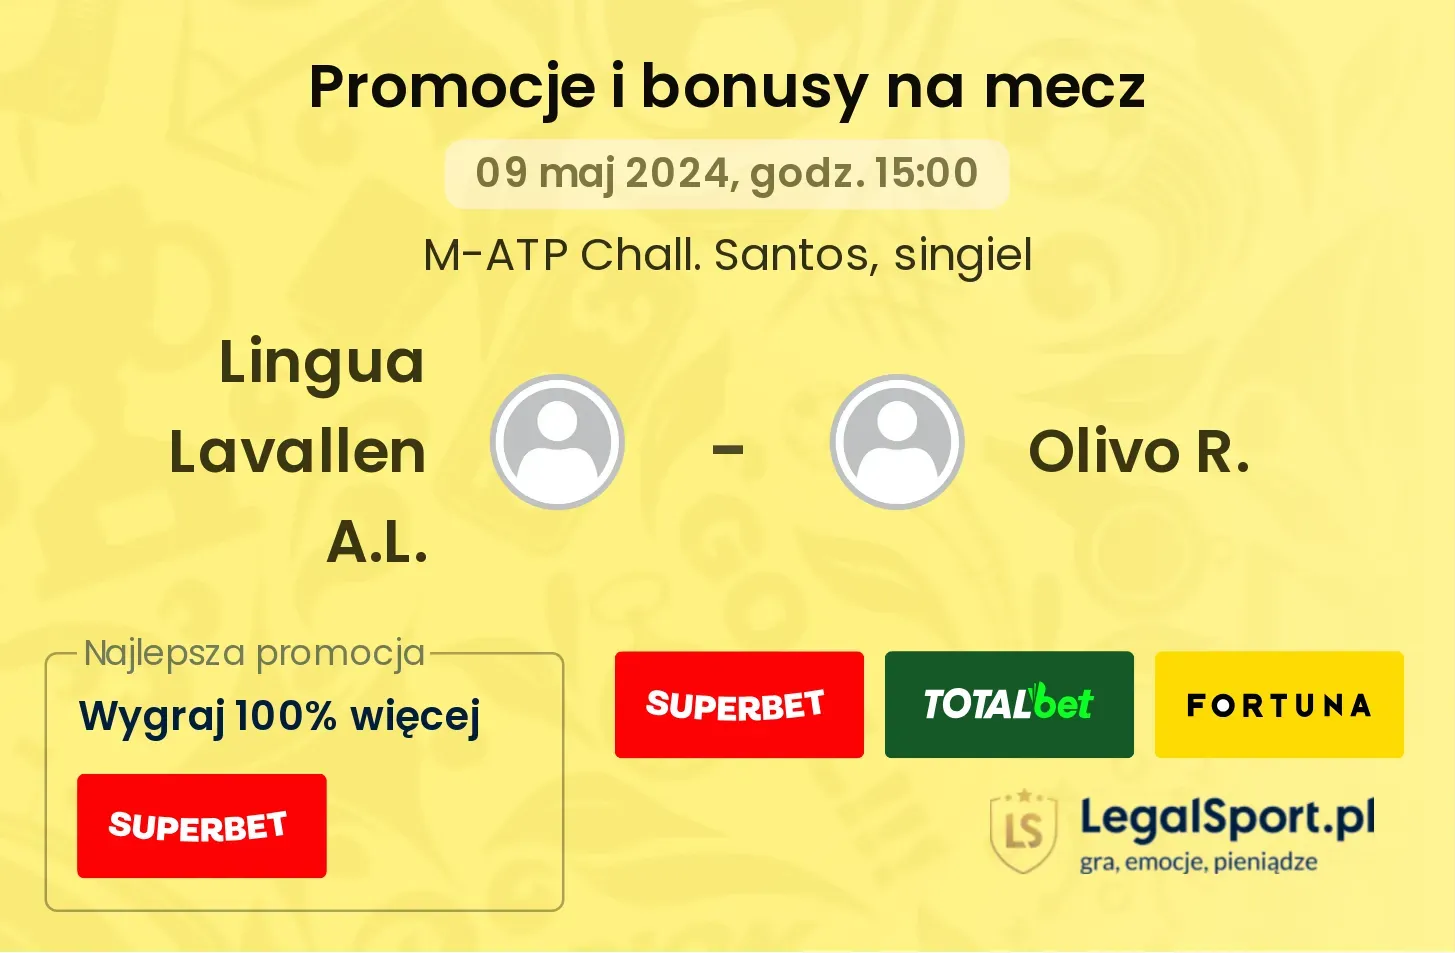 Lingua Lavallen A.L. - Olivo R. promocje bonusy na mecz